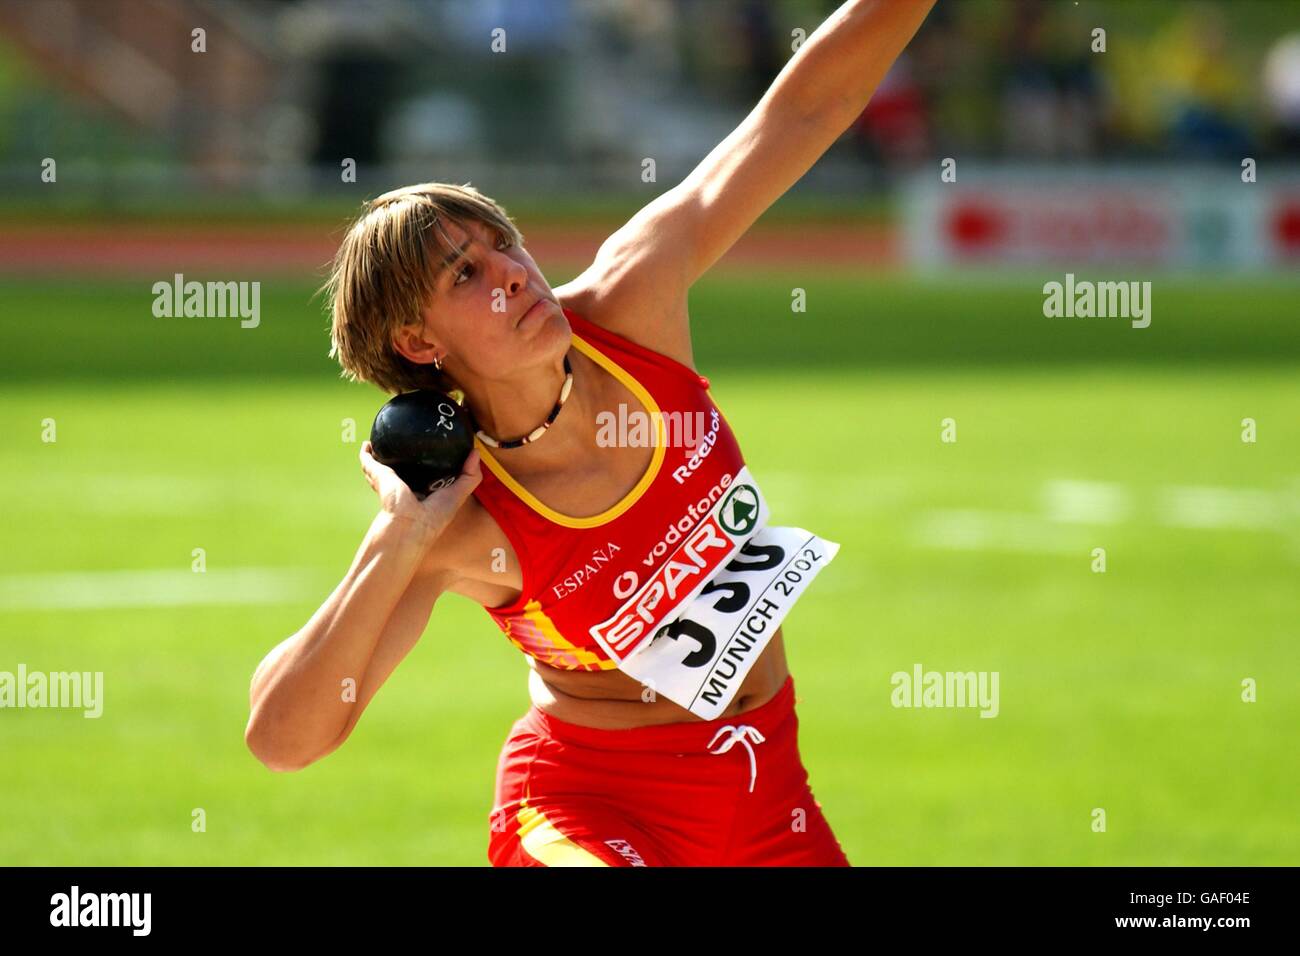 Athletics - European Athletics Championships - Munich 2002 - Women's Heptathlon - Shot Put. Spain's Maria Peinado during the Shot Put event in the Women's Heptathlon Stock Photo